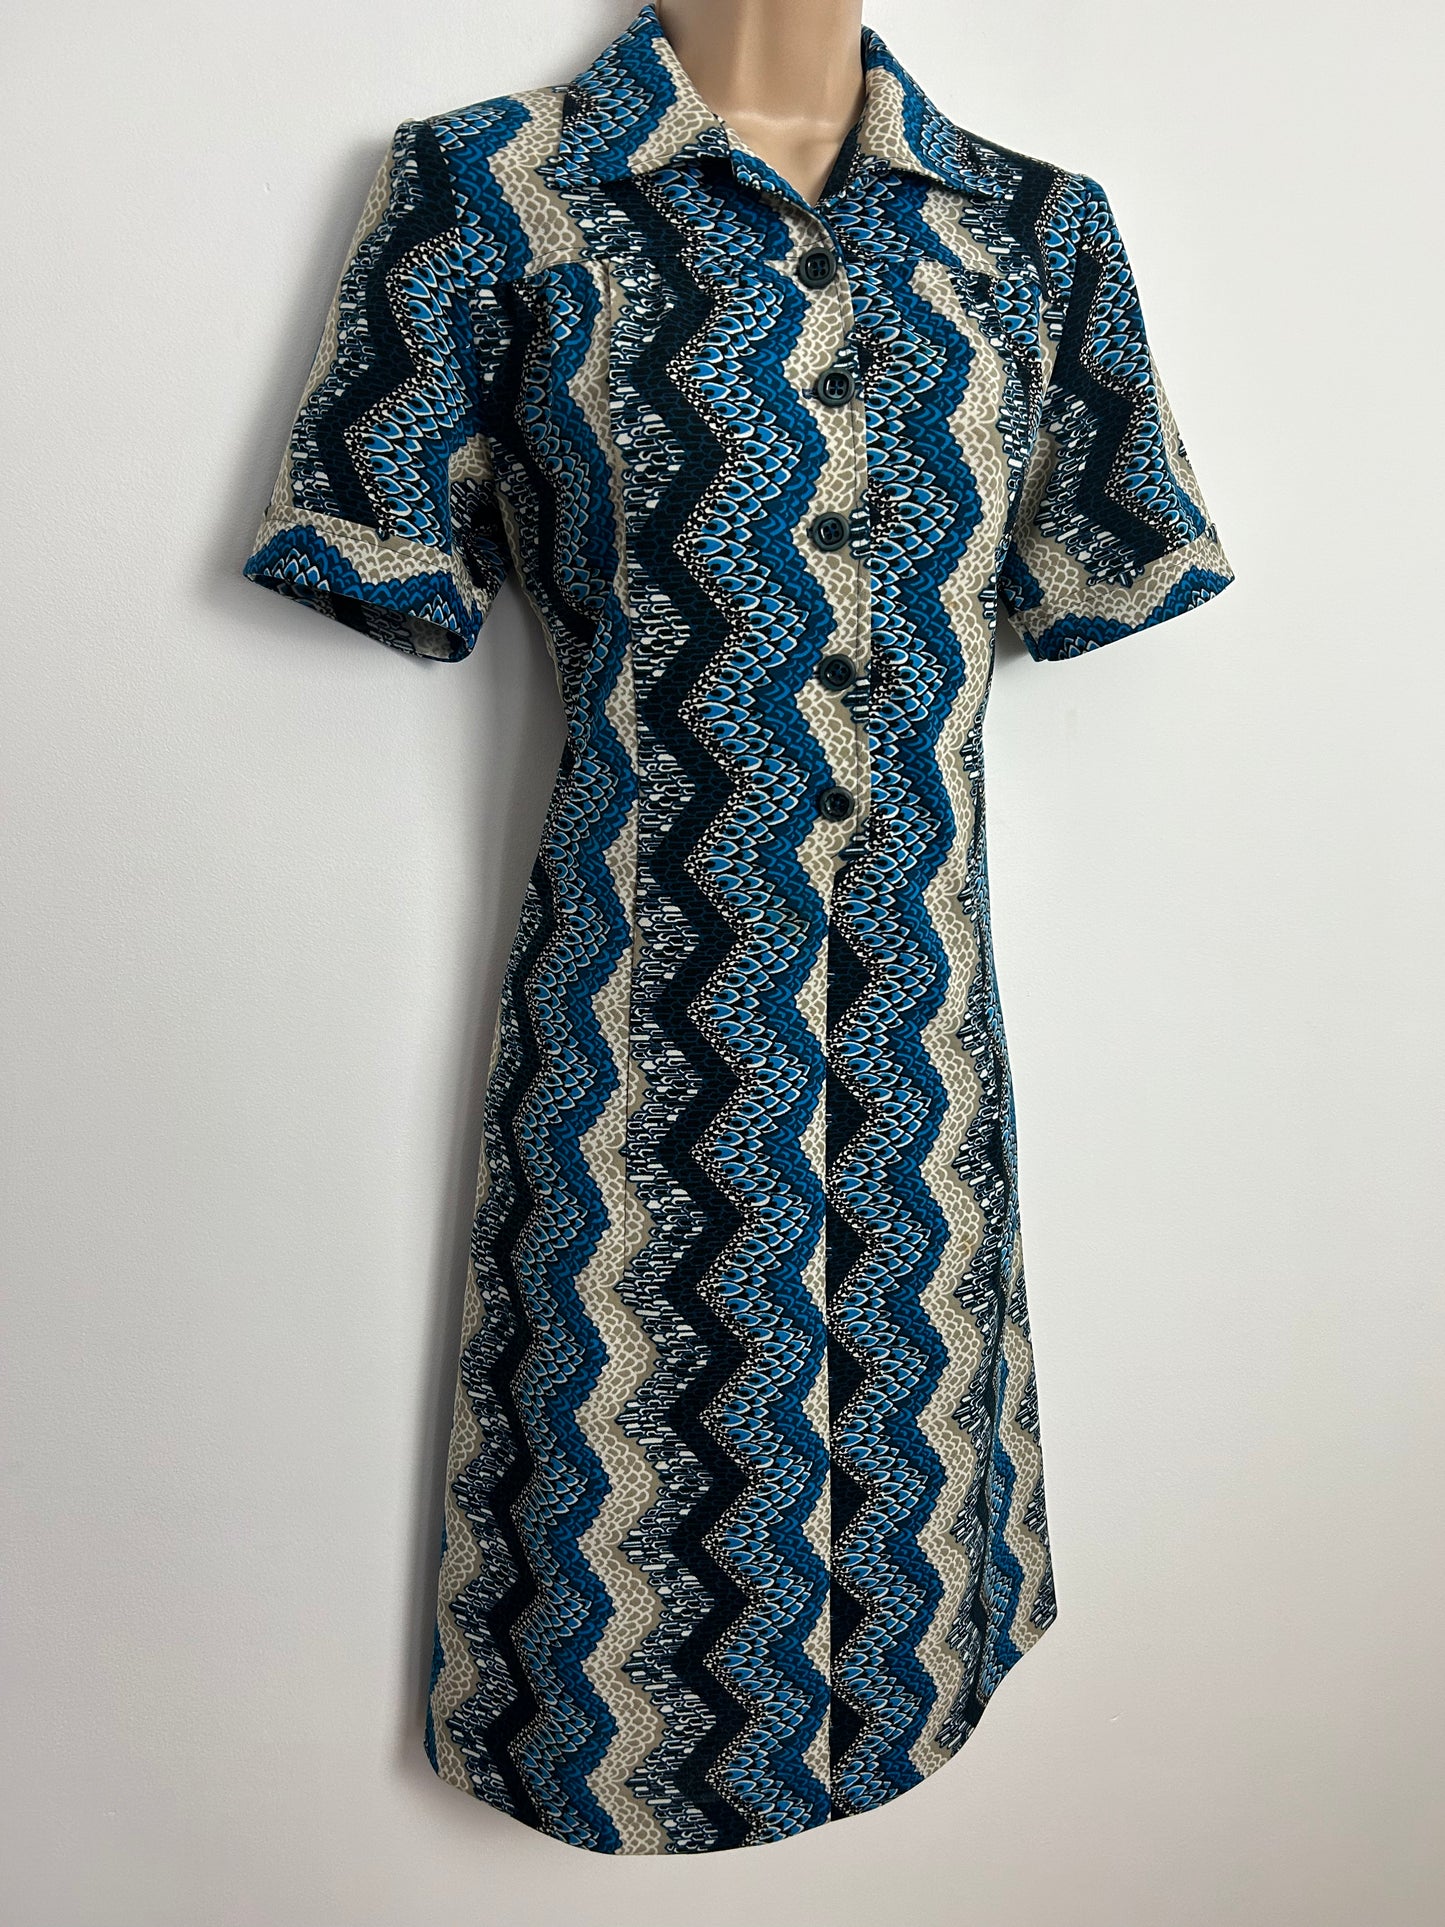 Vintage 1970s UK Size 12 Blue & Beige Abstract Petal Print Short Sleeve Mod Shift Dress